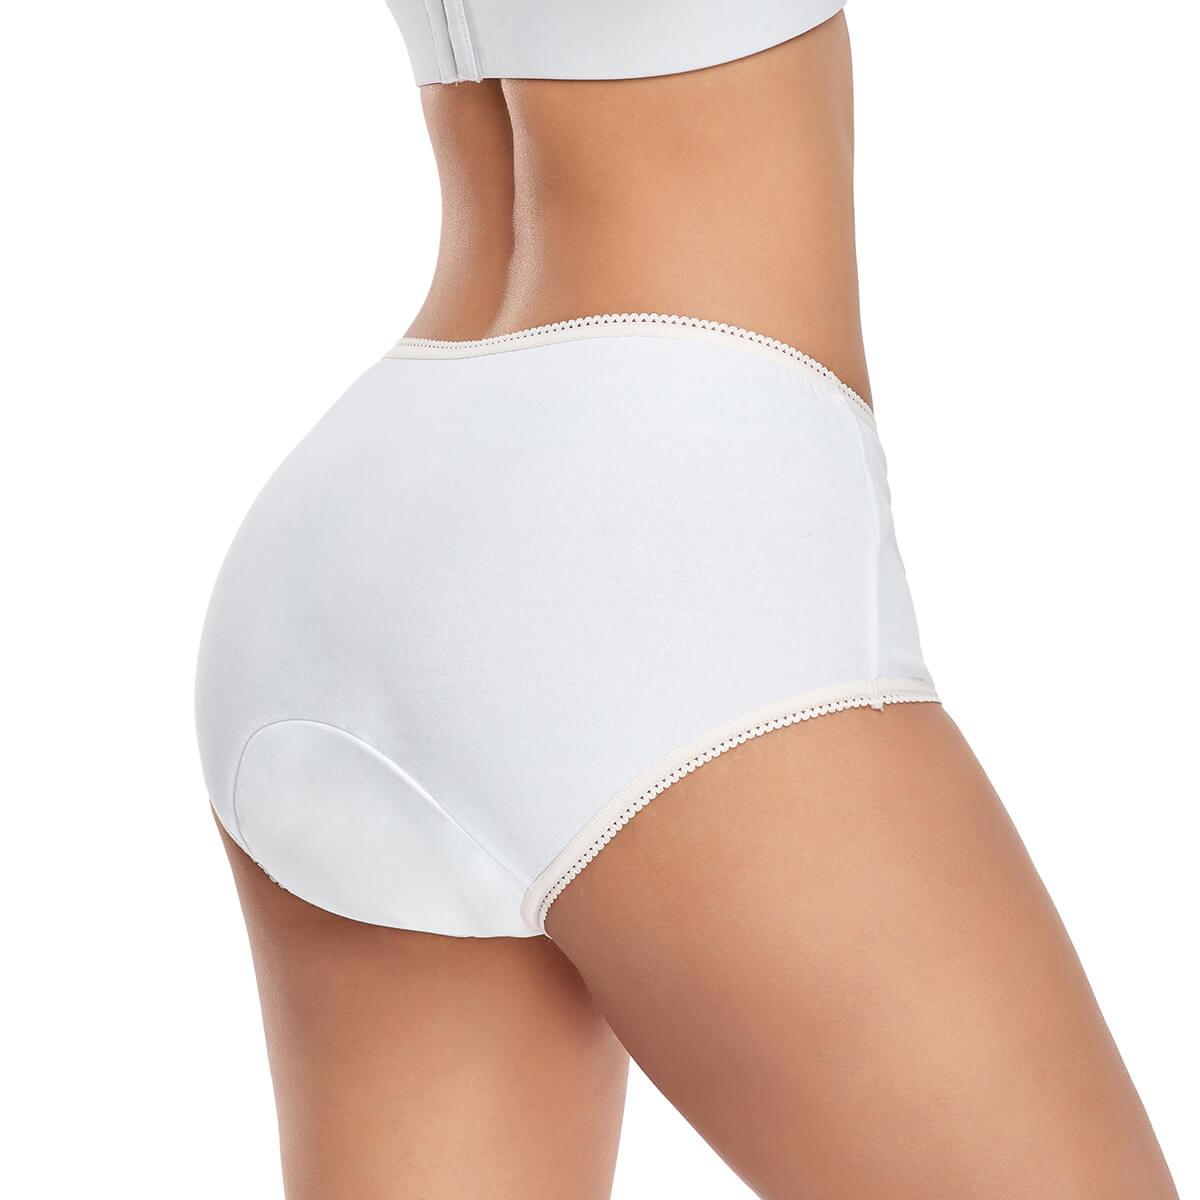 Incontinence Underwear for Women Leakproof Moderate Absorbency